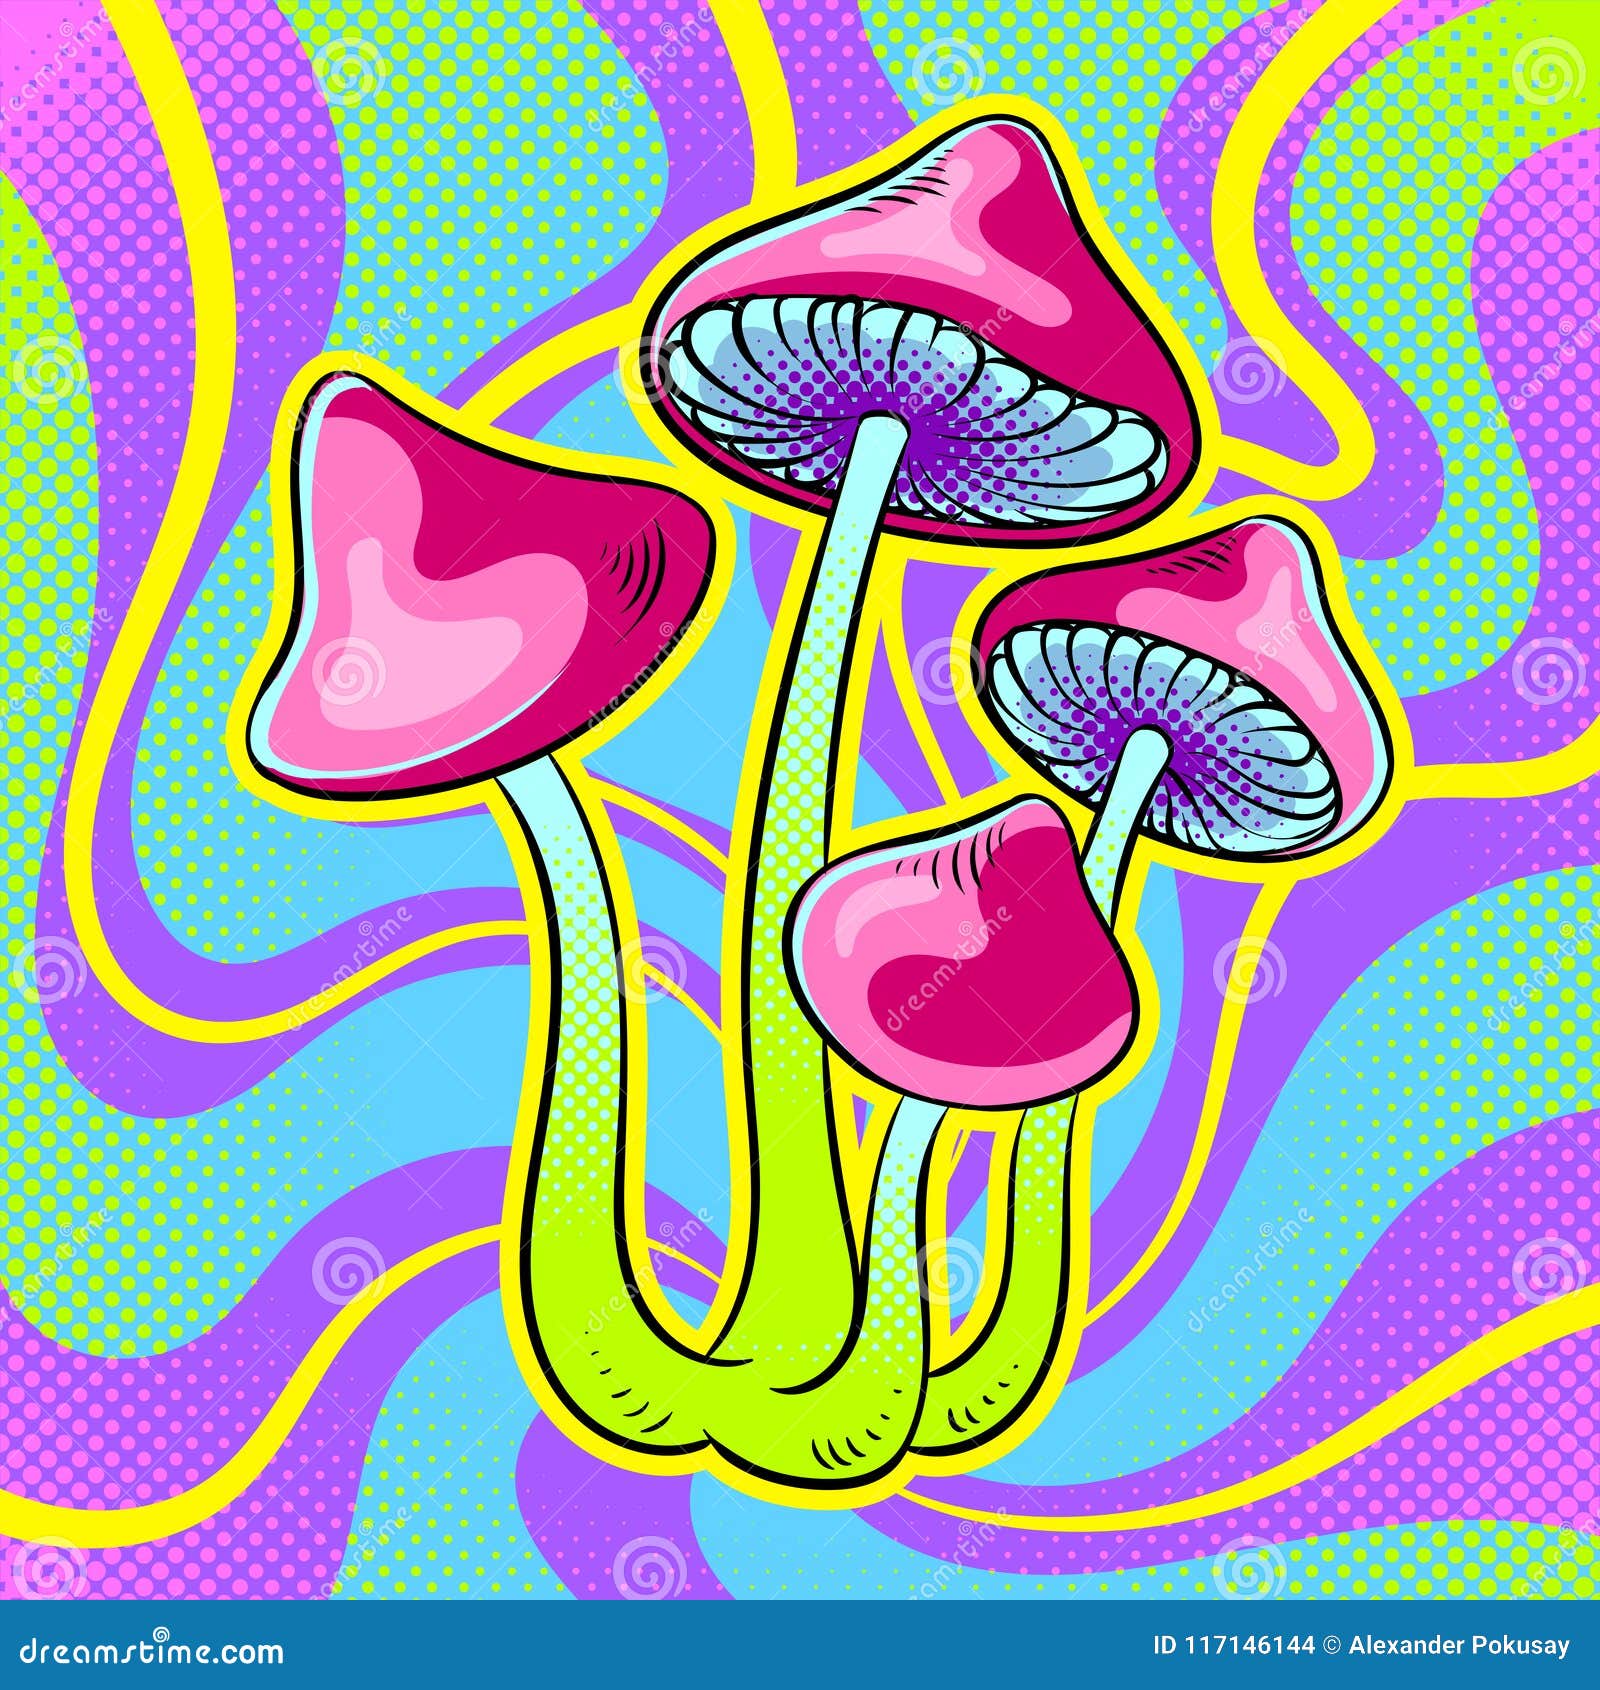 narcotic mushroom pop art  